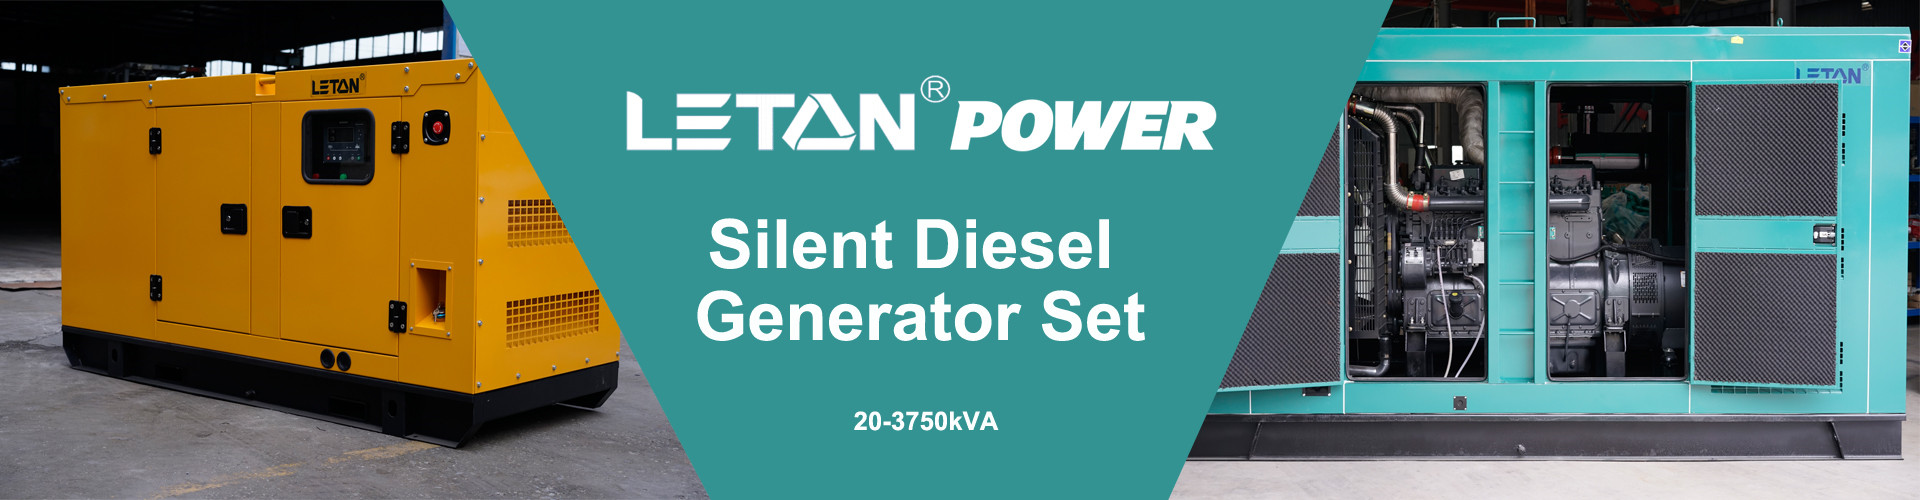 Silent diesel generator sett lavt støy kalesje generatorer Leton powerImage